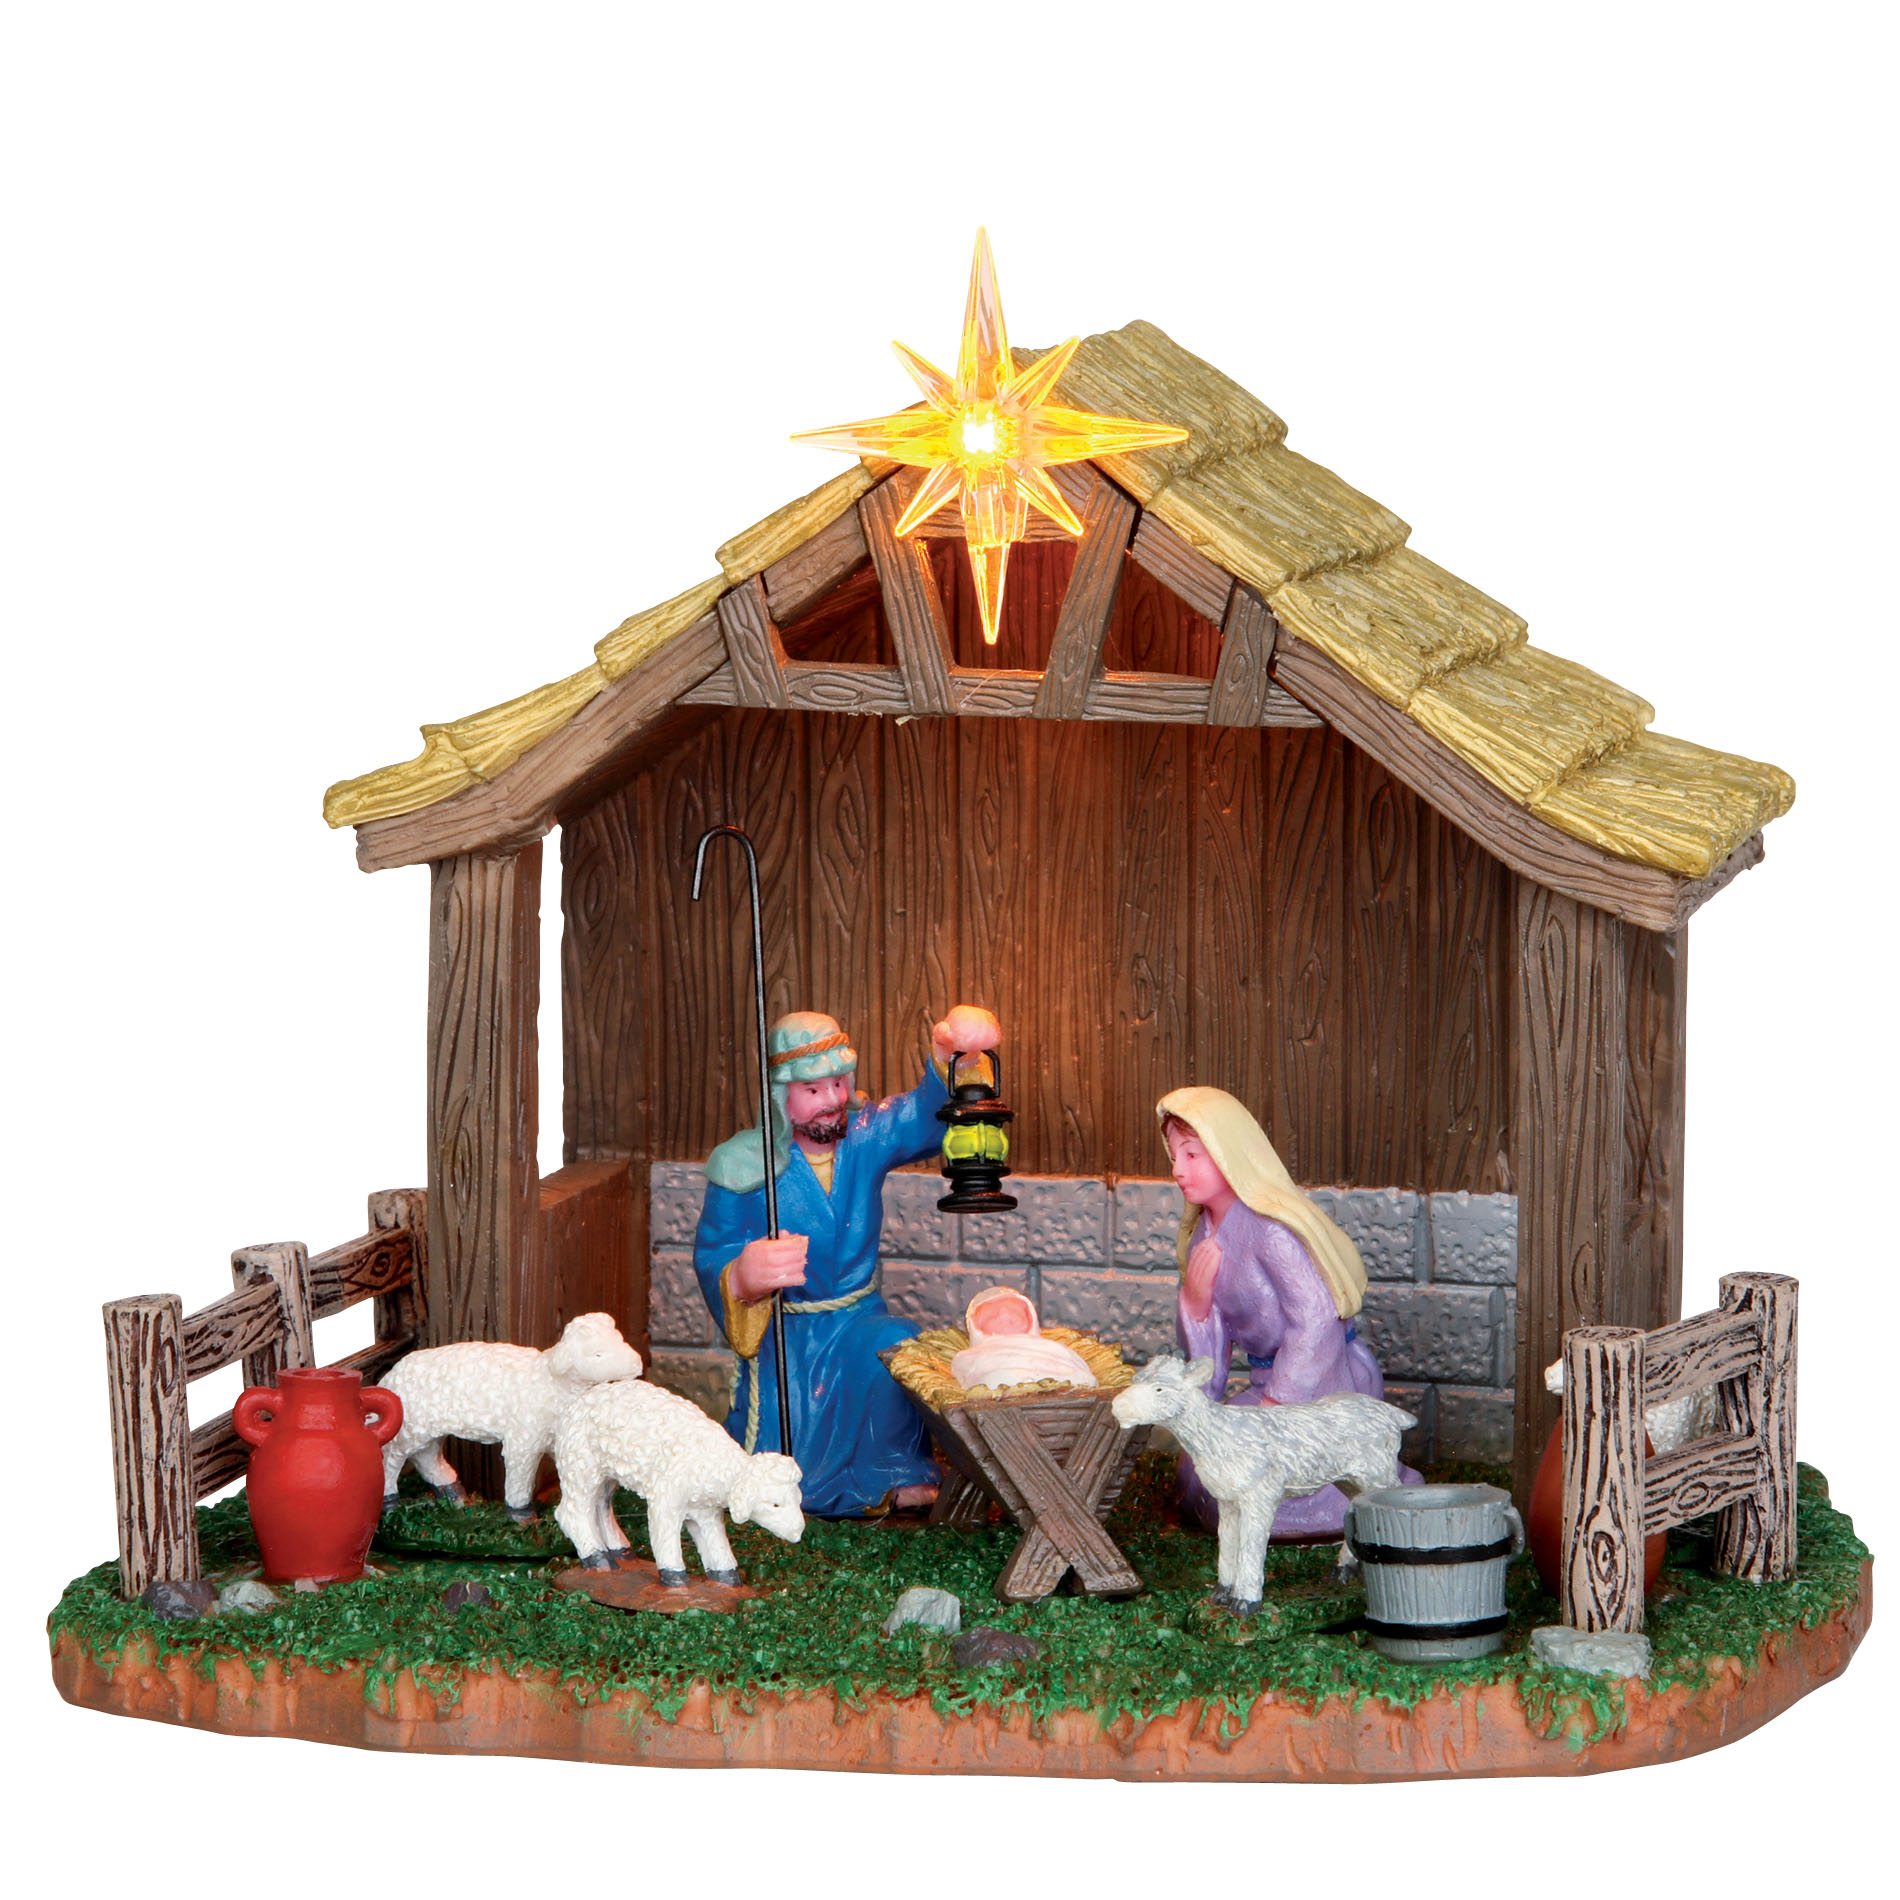 Lemax Village Collection Christmas Village Accessory, Nativity Scene, B/O (4.5V)